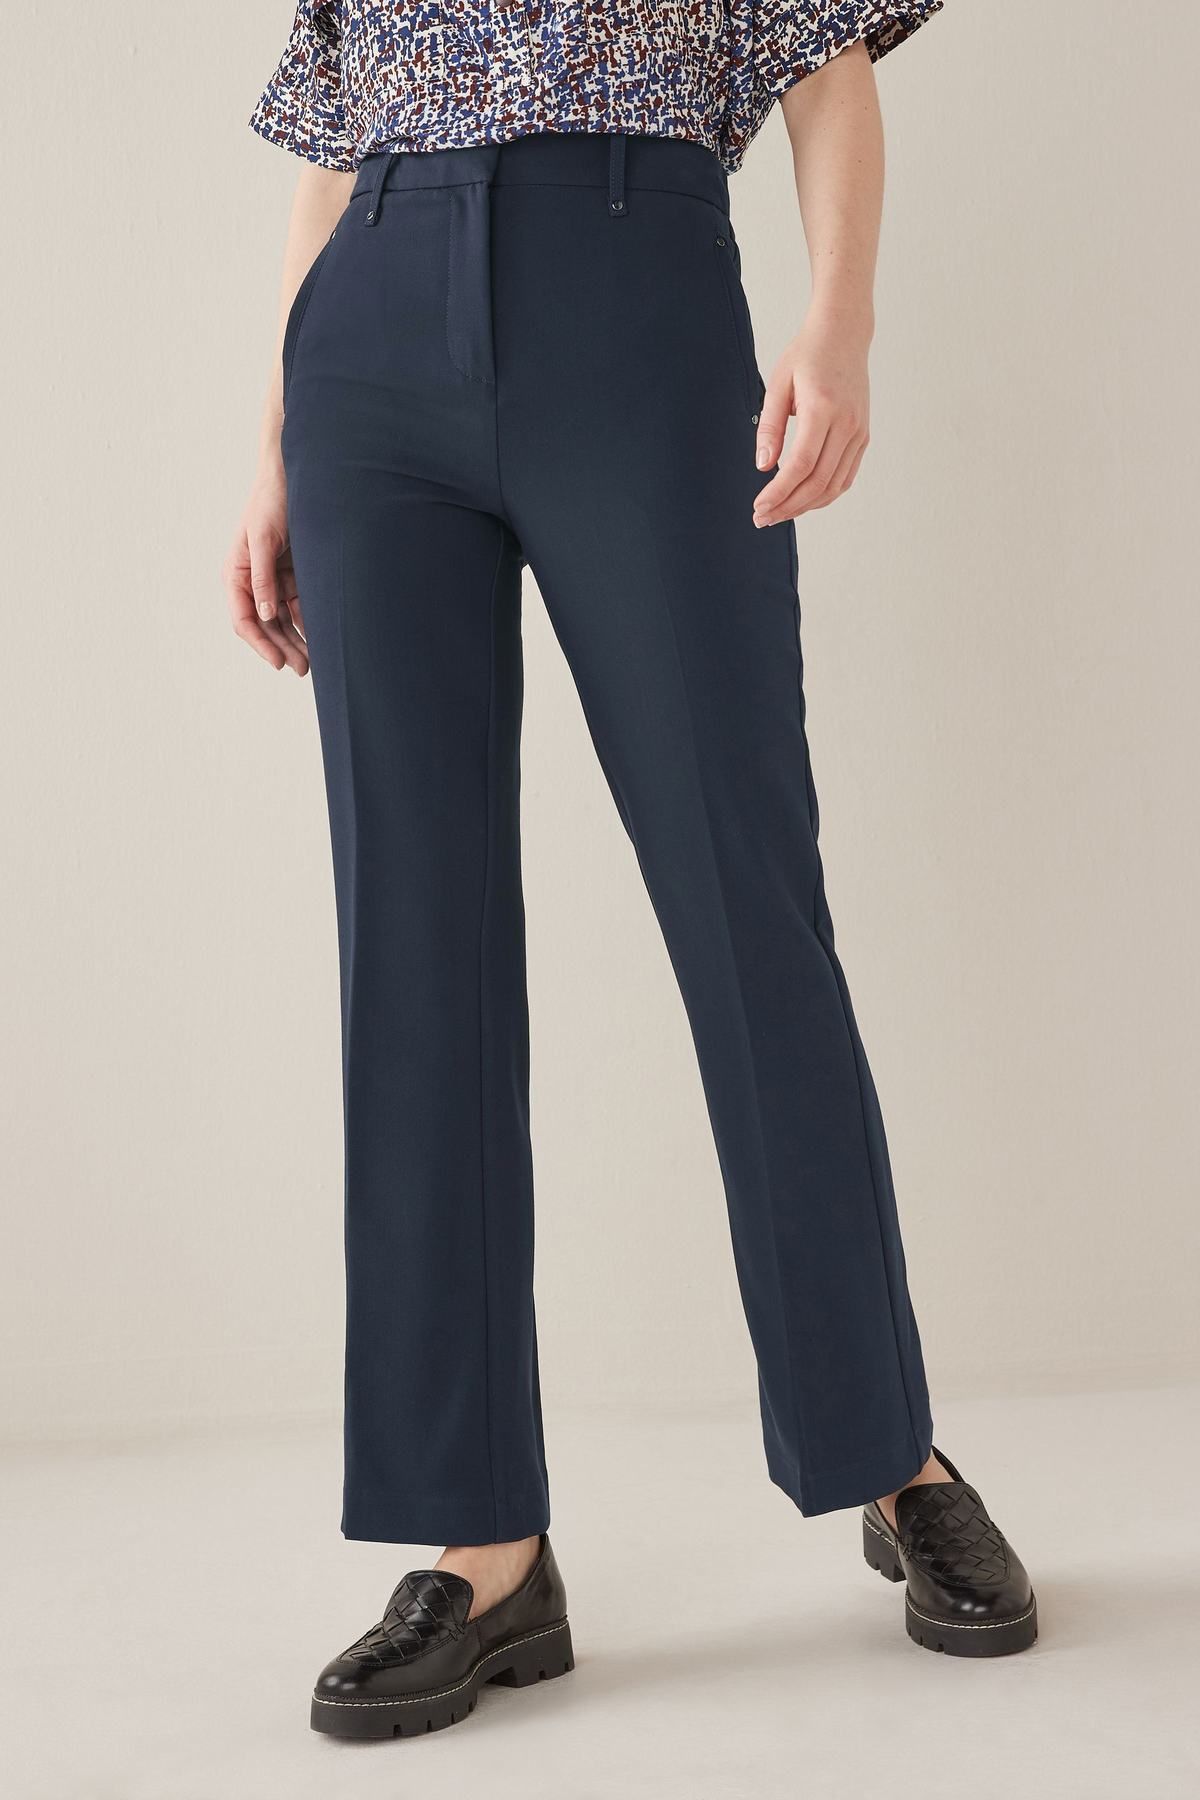 Uerlsty Women's Skinny Denim Bootcut Jeans Long Pants Ladies Low Waist  Flared Trousers - Walmart.com